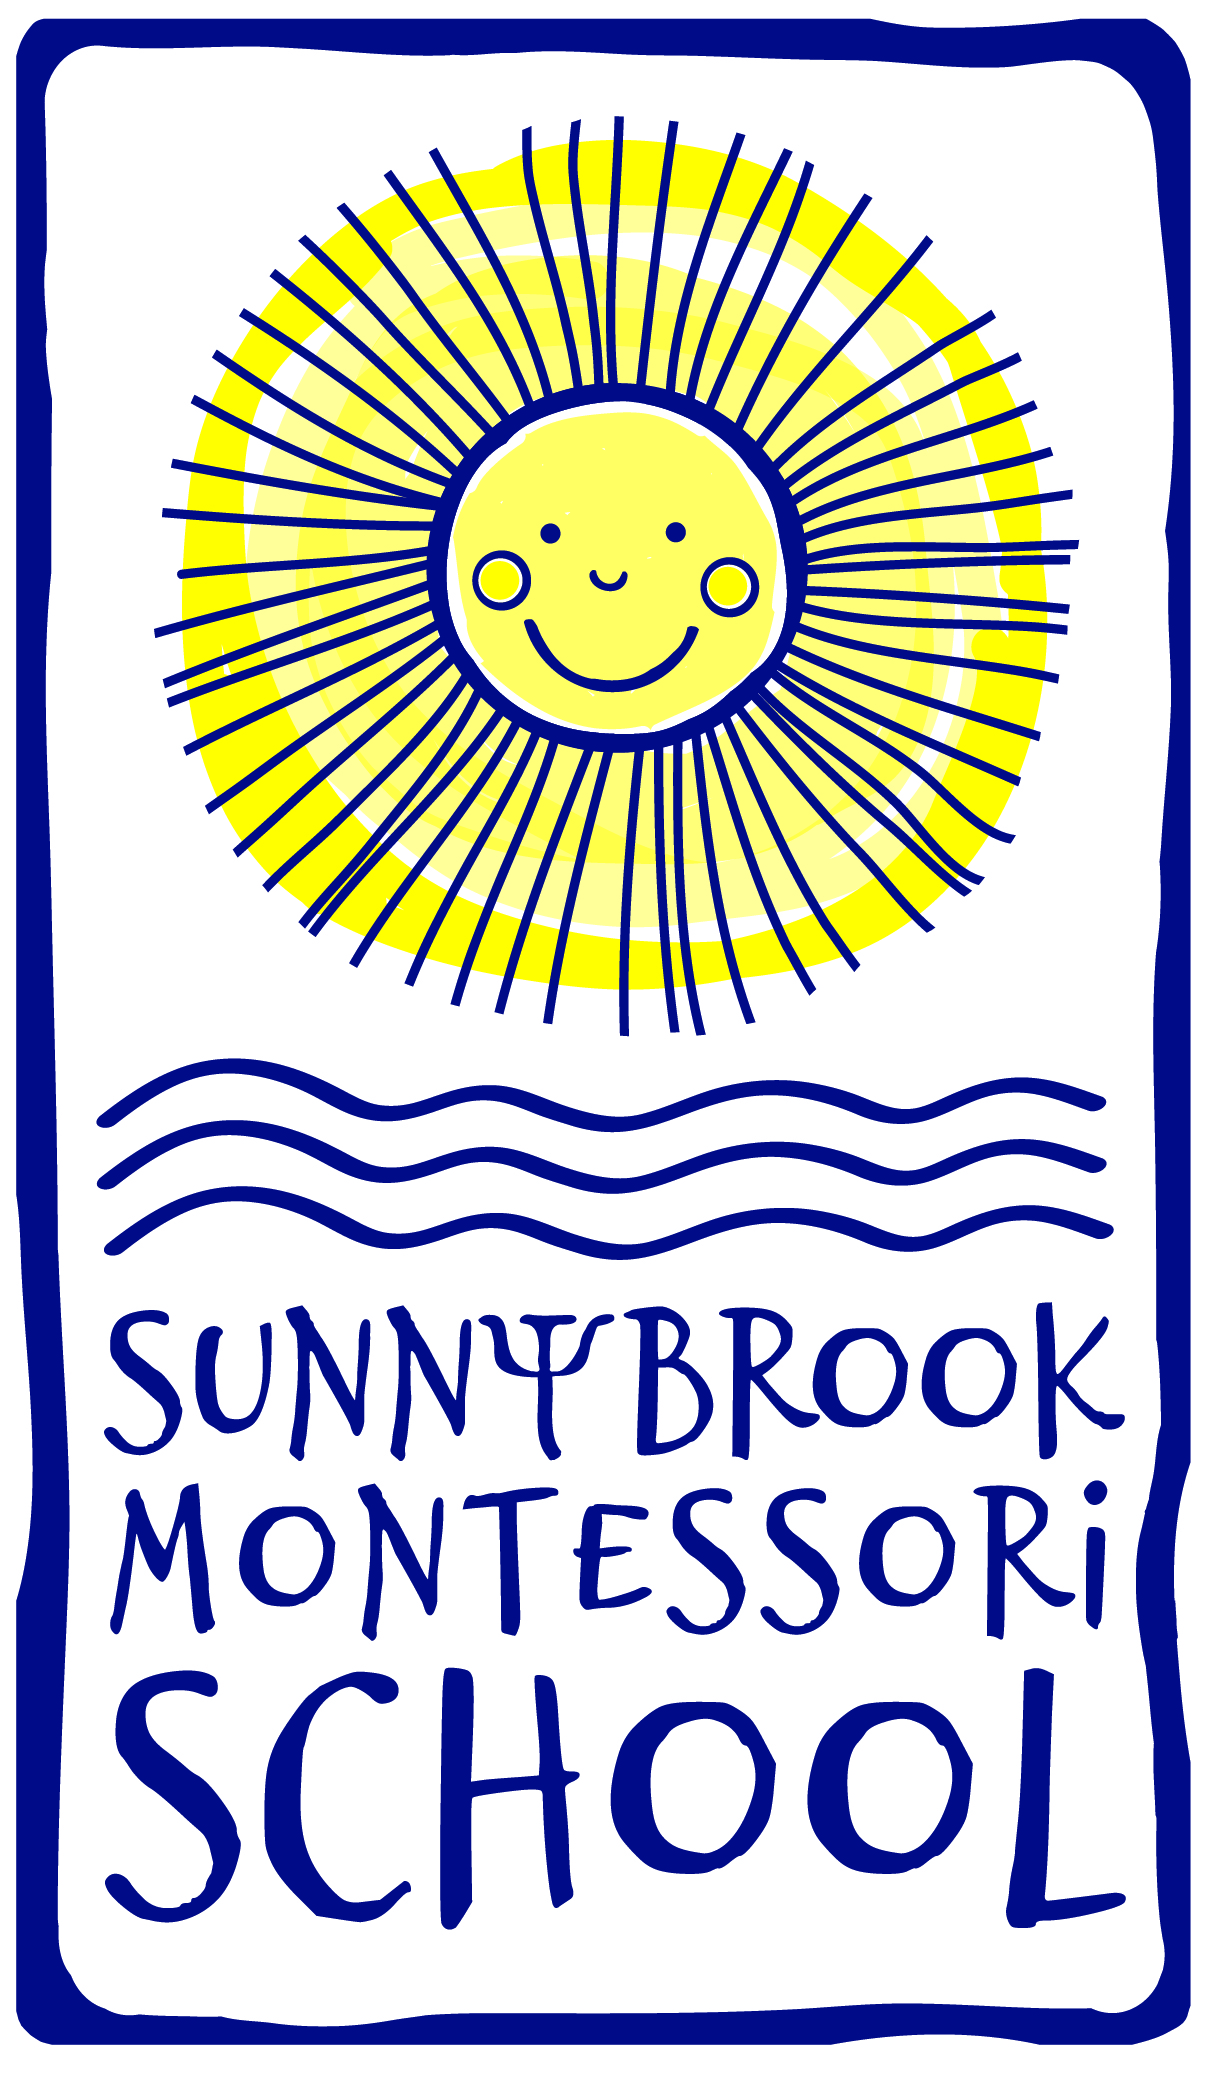 Sunnybrook Montessori School